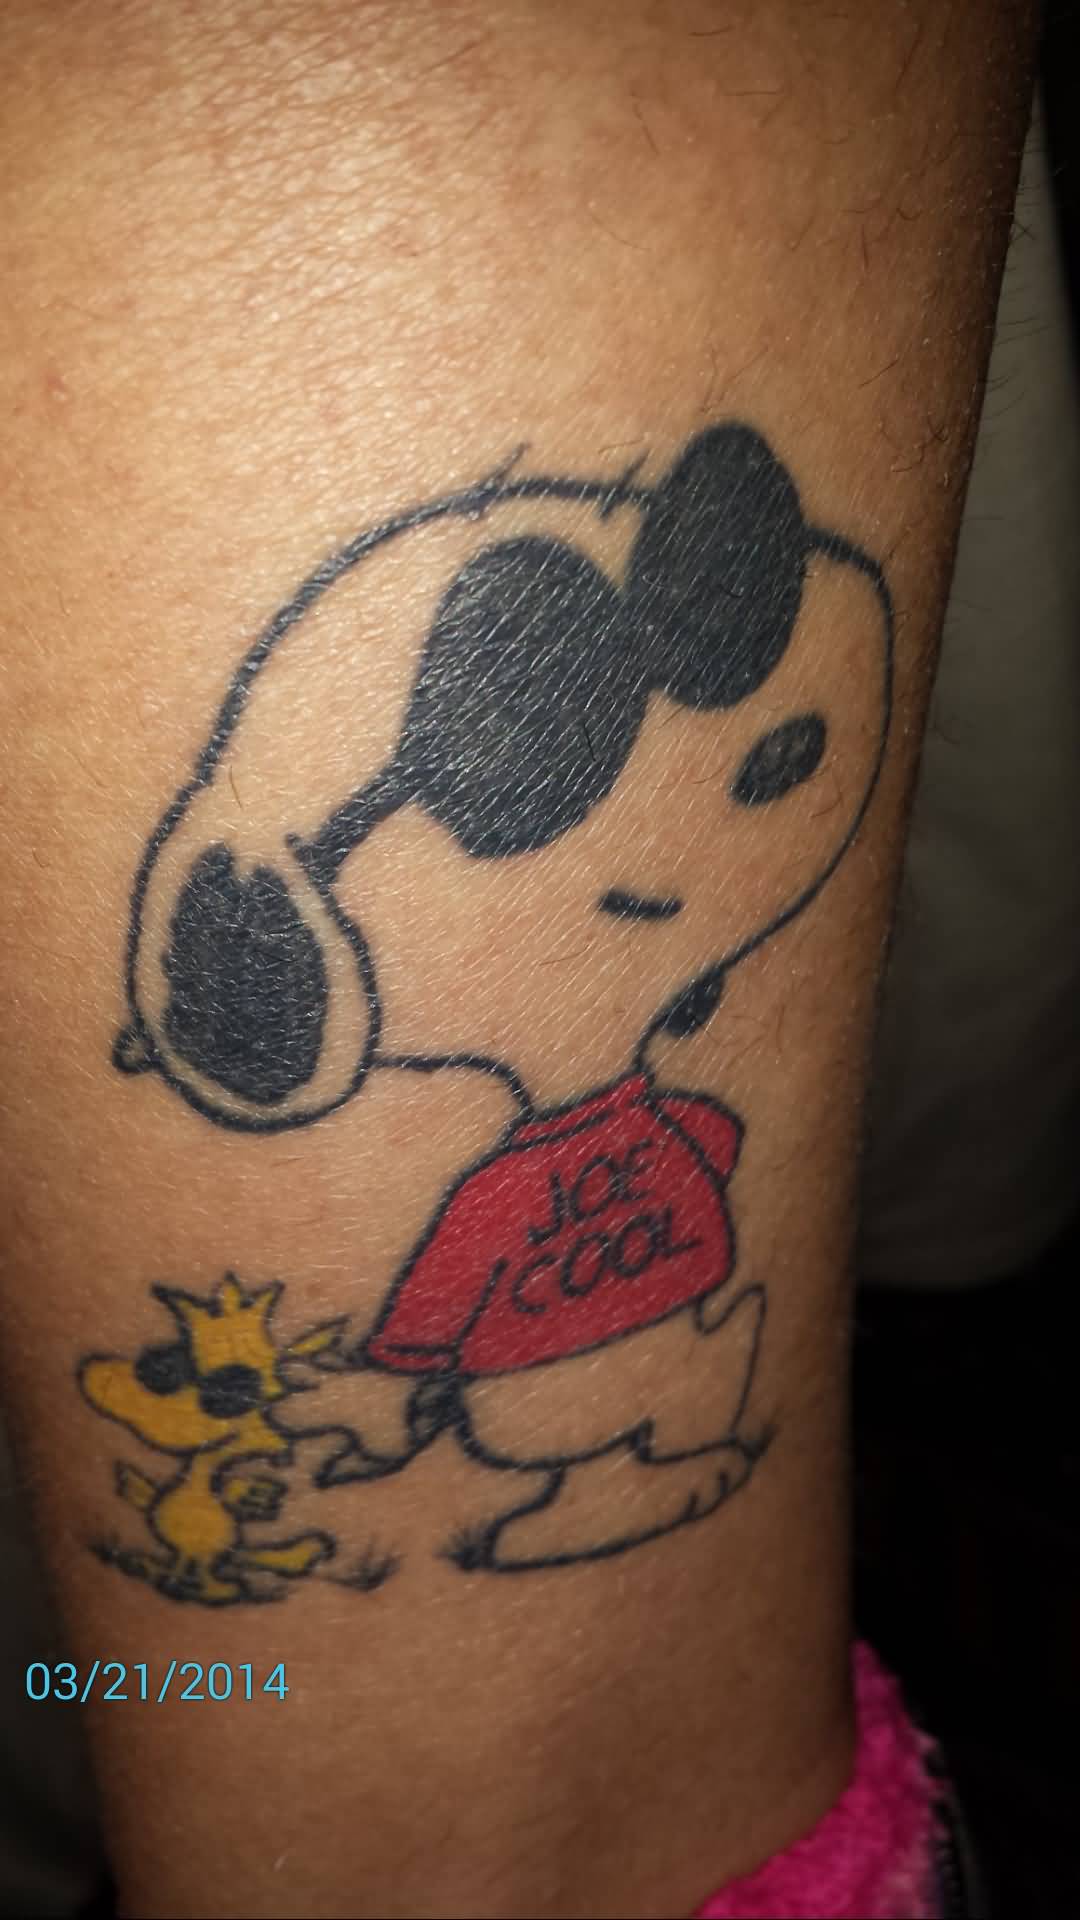 Cool Snoopy Tattoo Idea